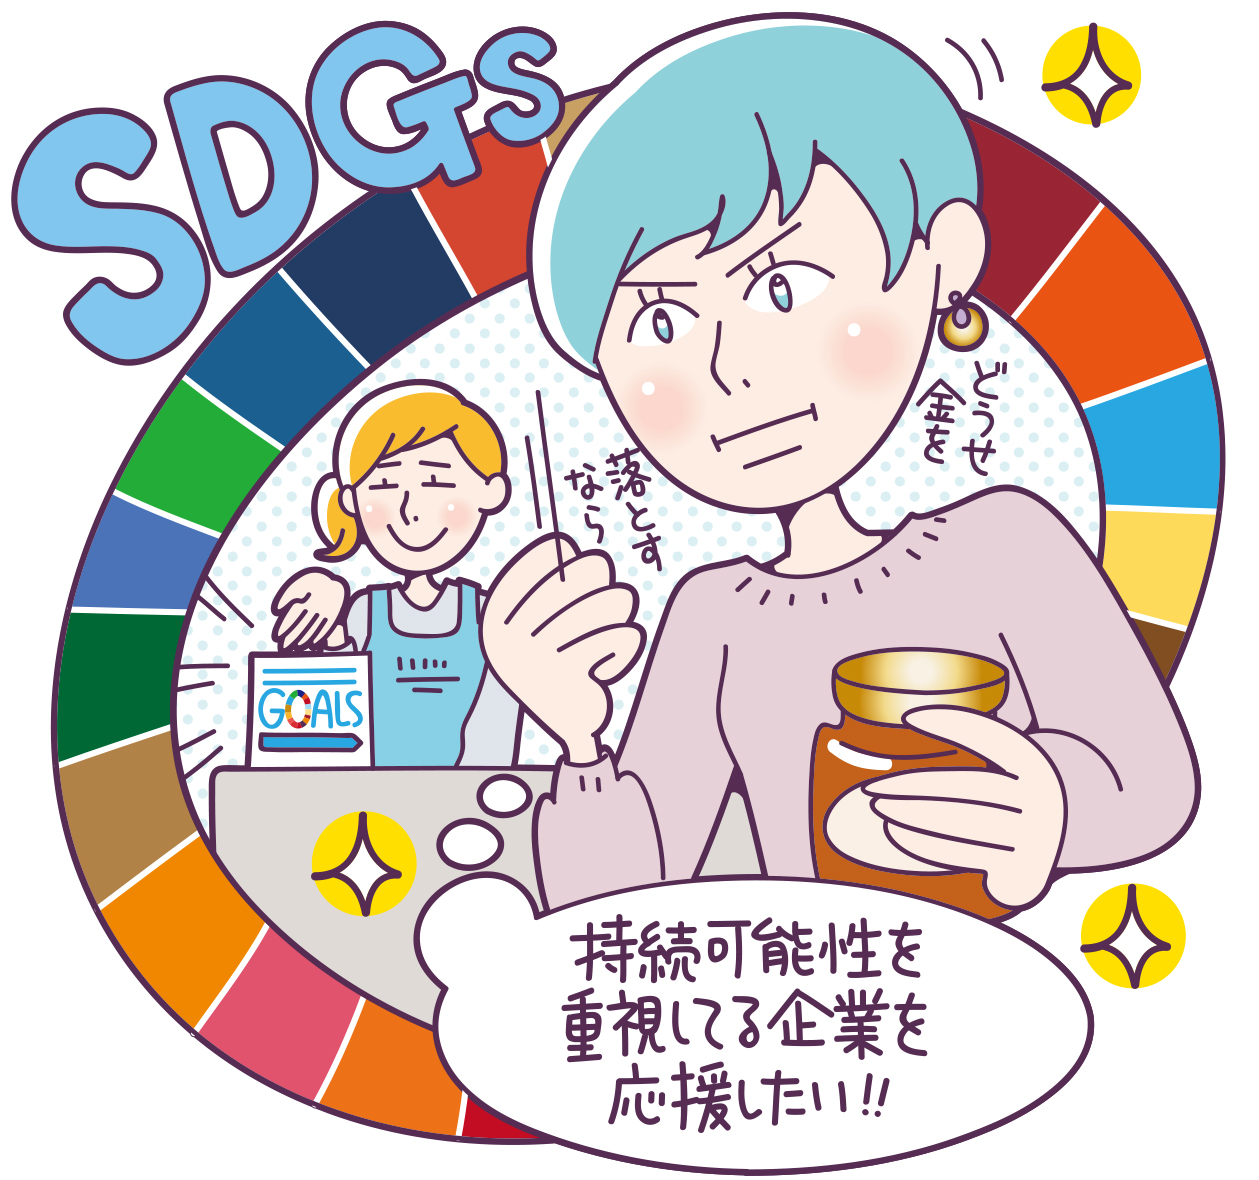 SDGs MAGAZINE